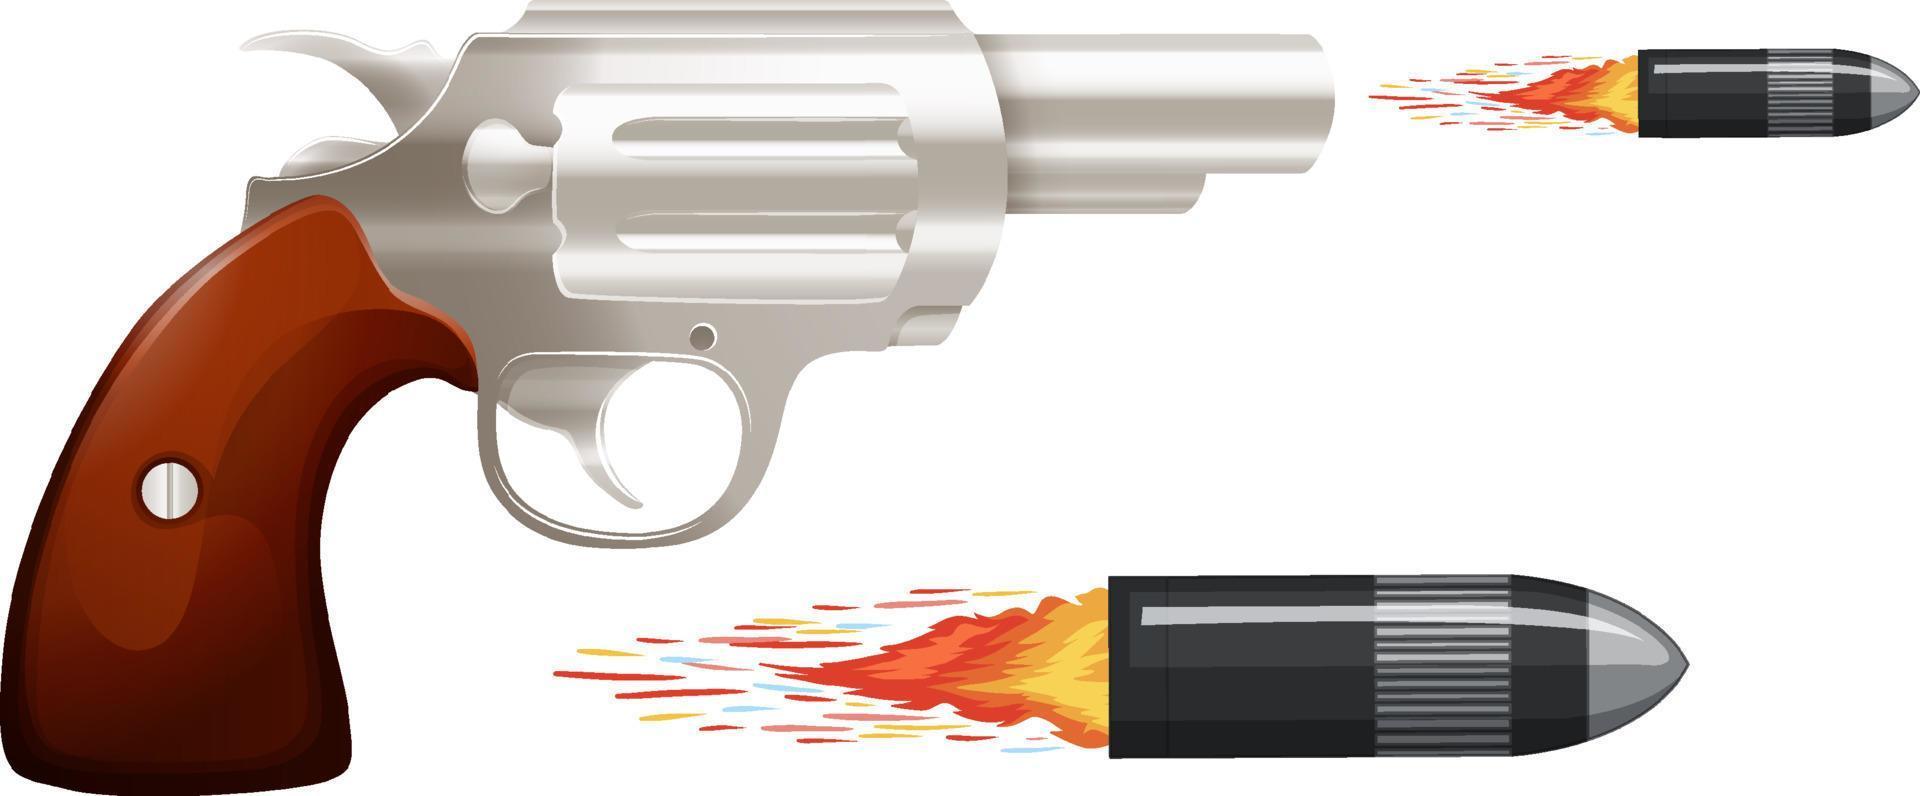 Pistol gun with bullets vector